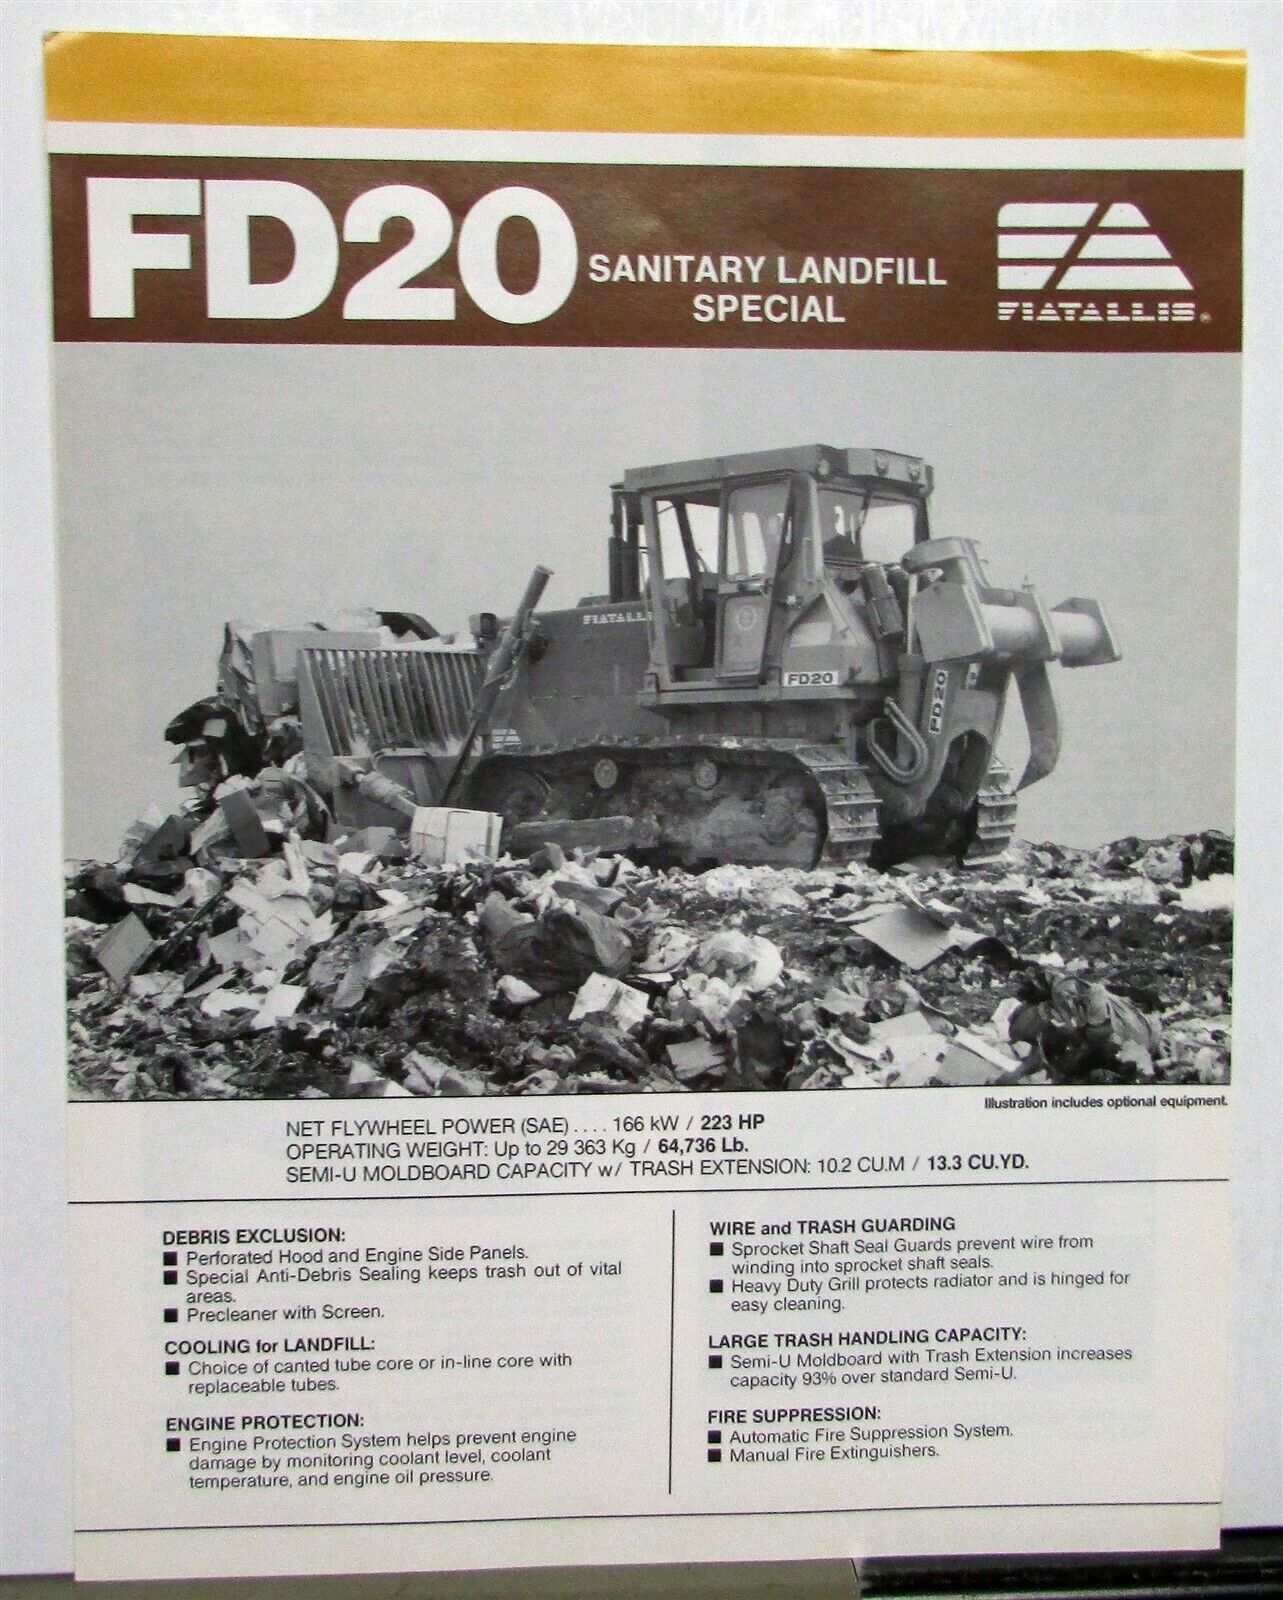 1987 Fiat Allis FD20 Sanitary Landfill Special Specs Construction Sale Brochure